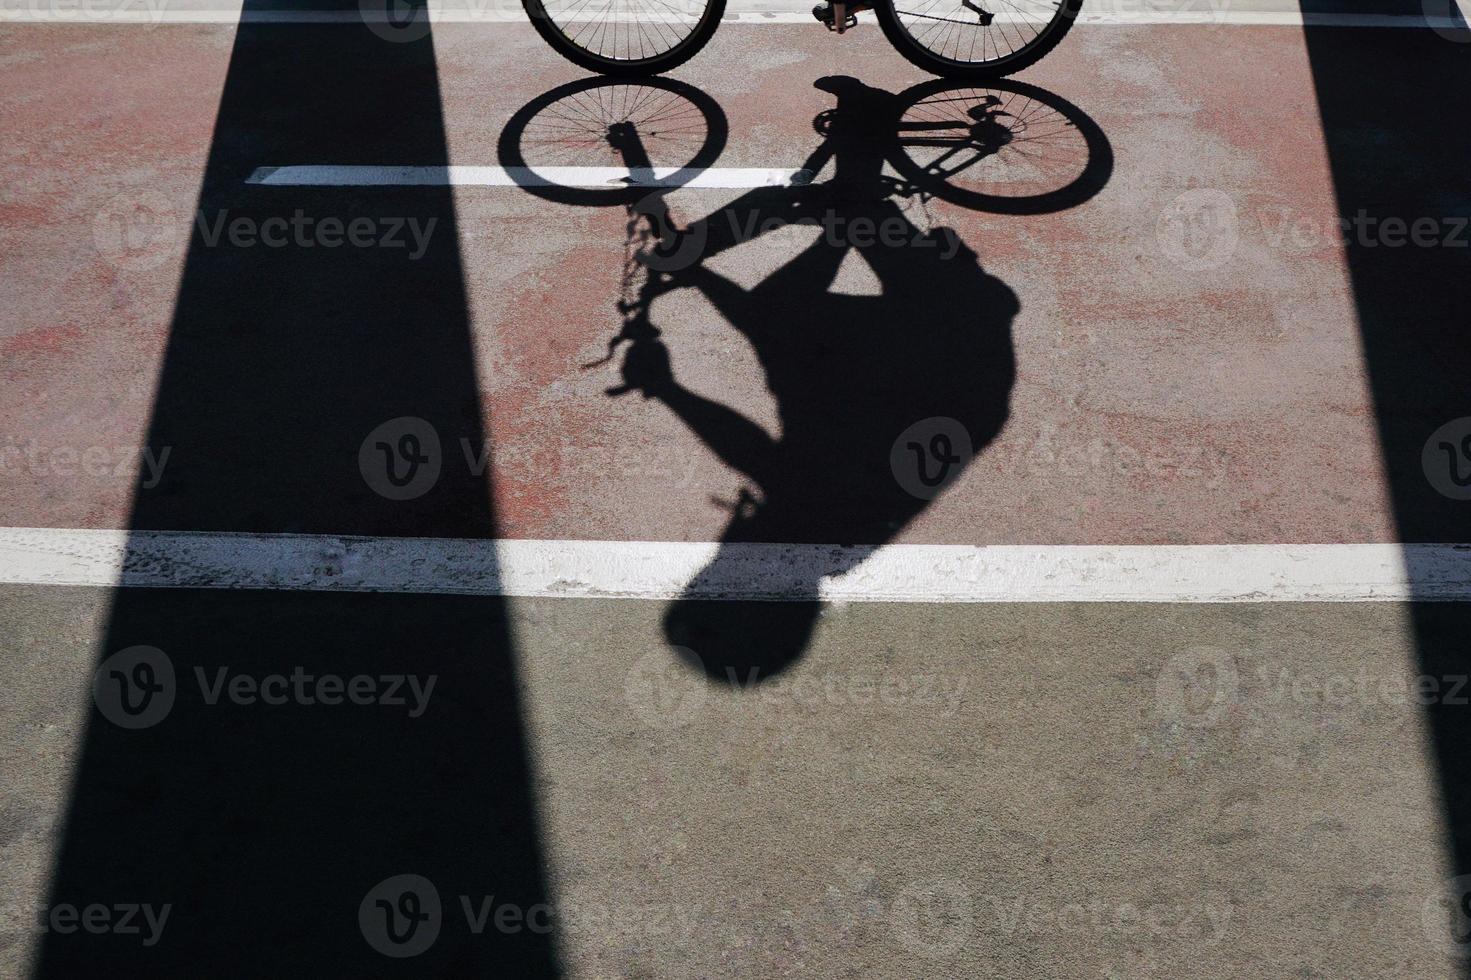 ombres de cycliste dans la rue photo